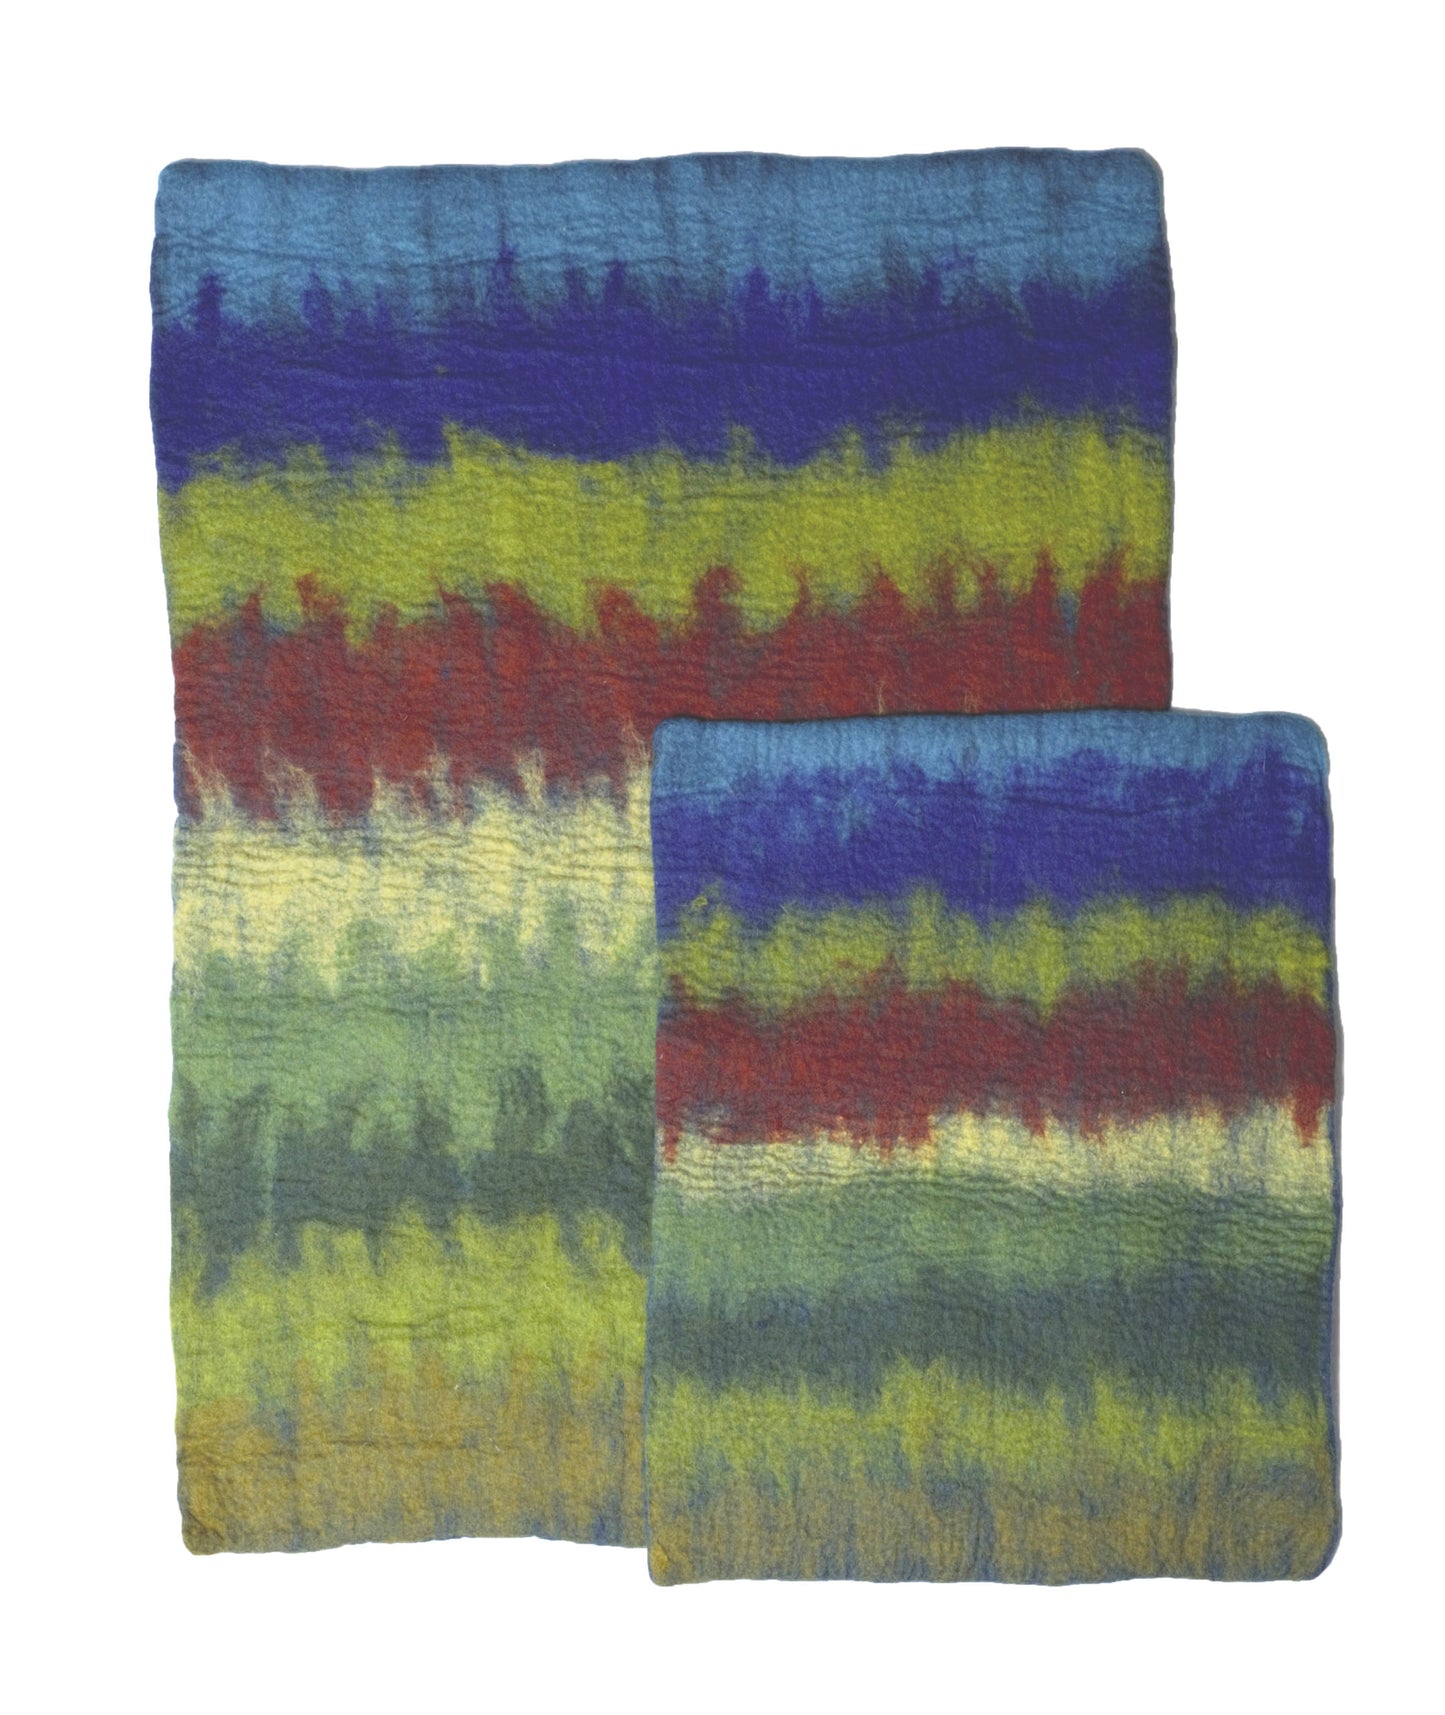 Wool Mat, Multi-Ombre, Bright